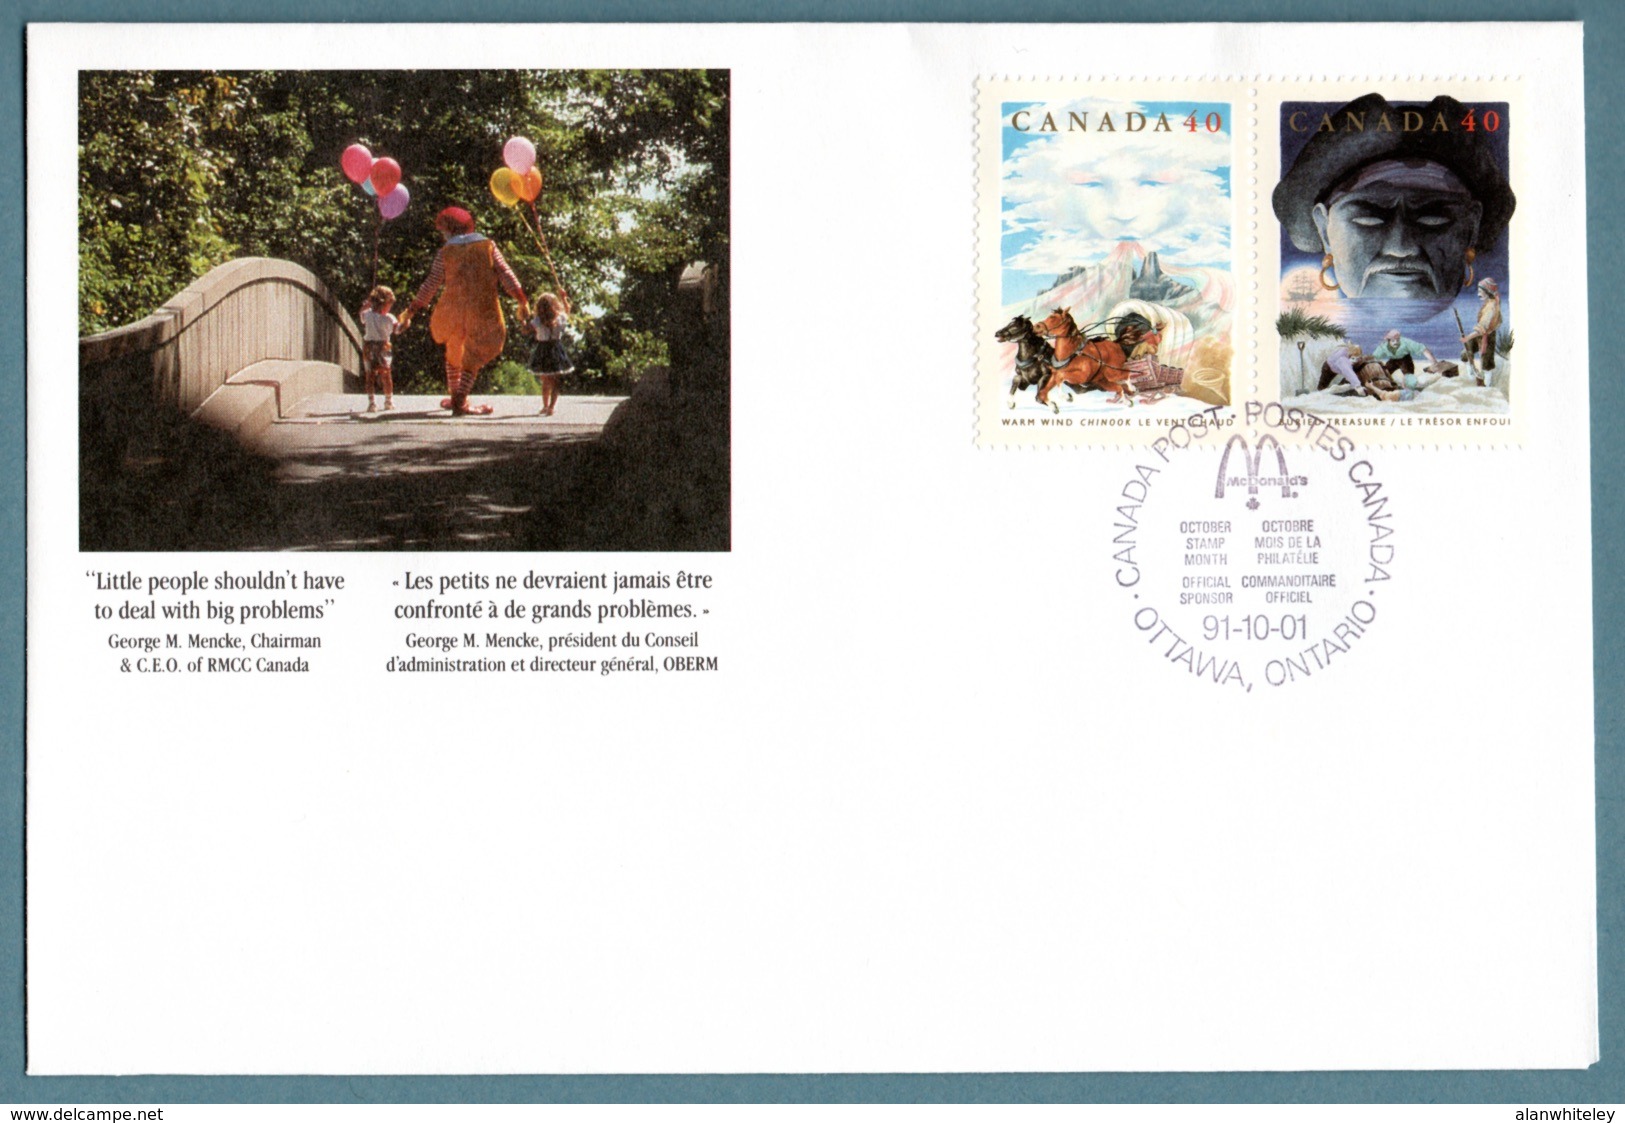 CANADA 1991 Canadian Folktales / McDonalds: Commemorative Cover CANCELLED - Enveloppes Commémoratives